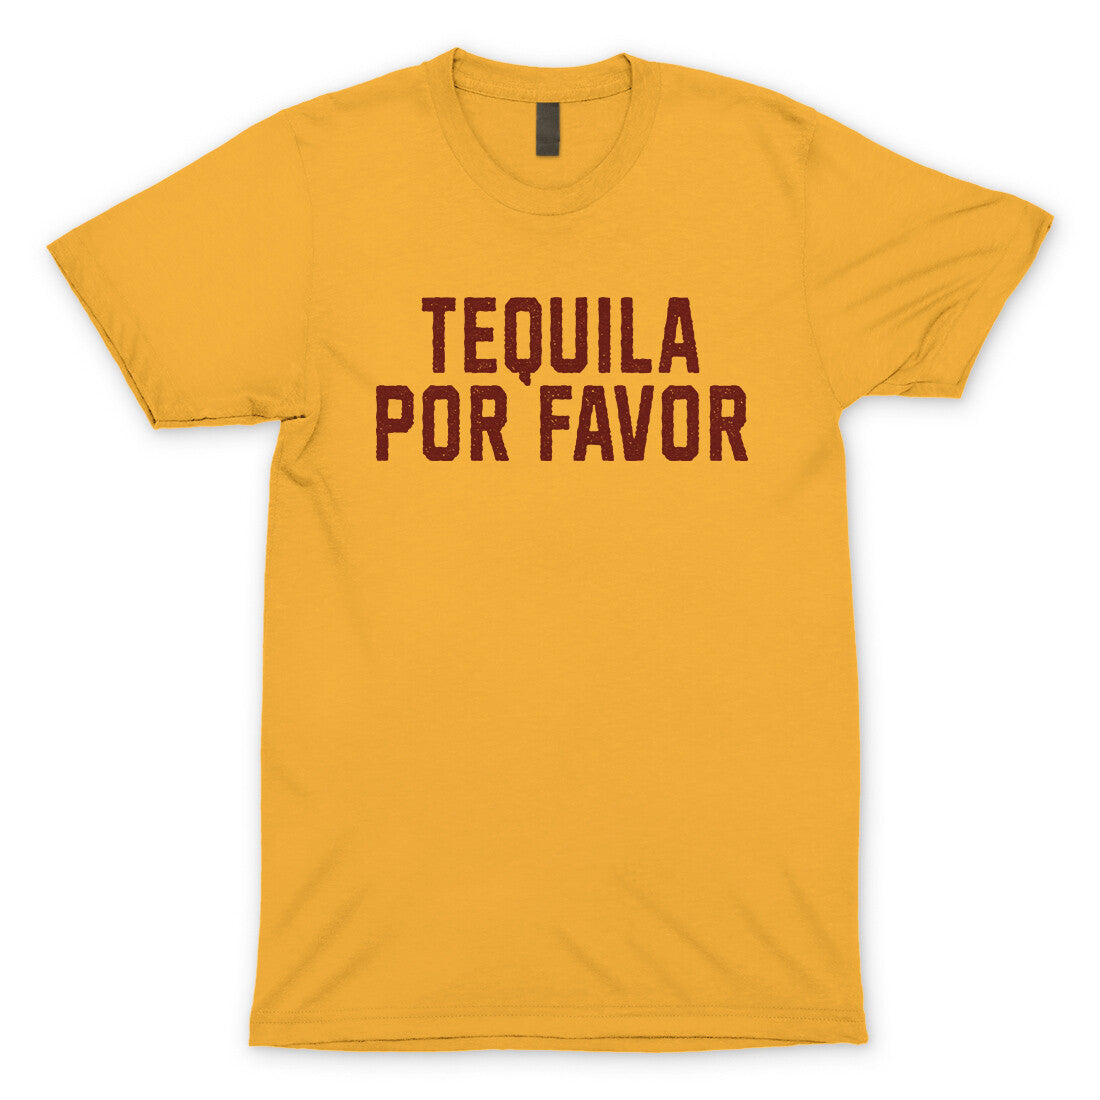 Tequila Por Favor in Gold Color